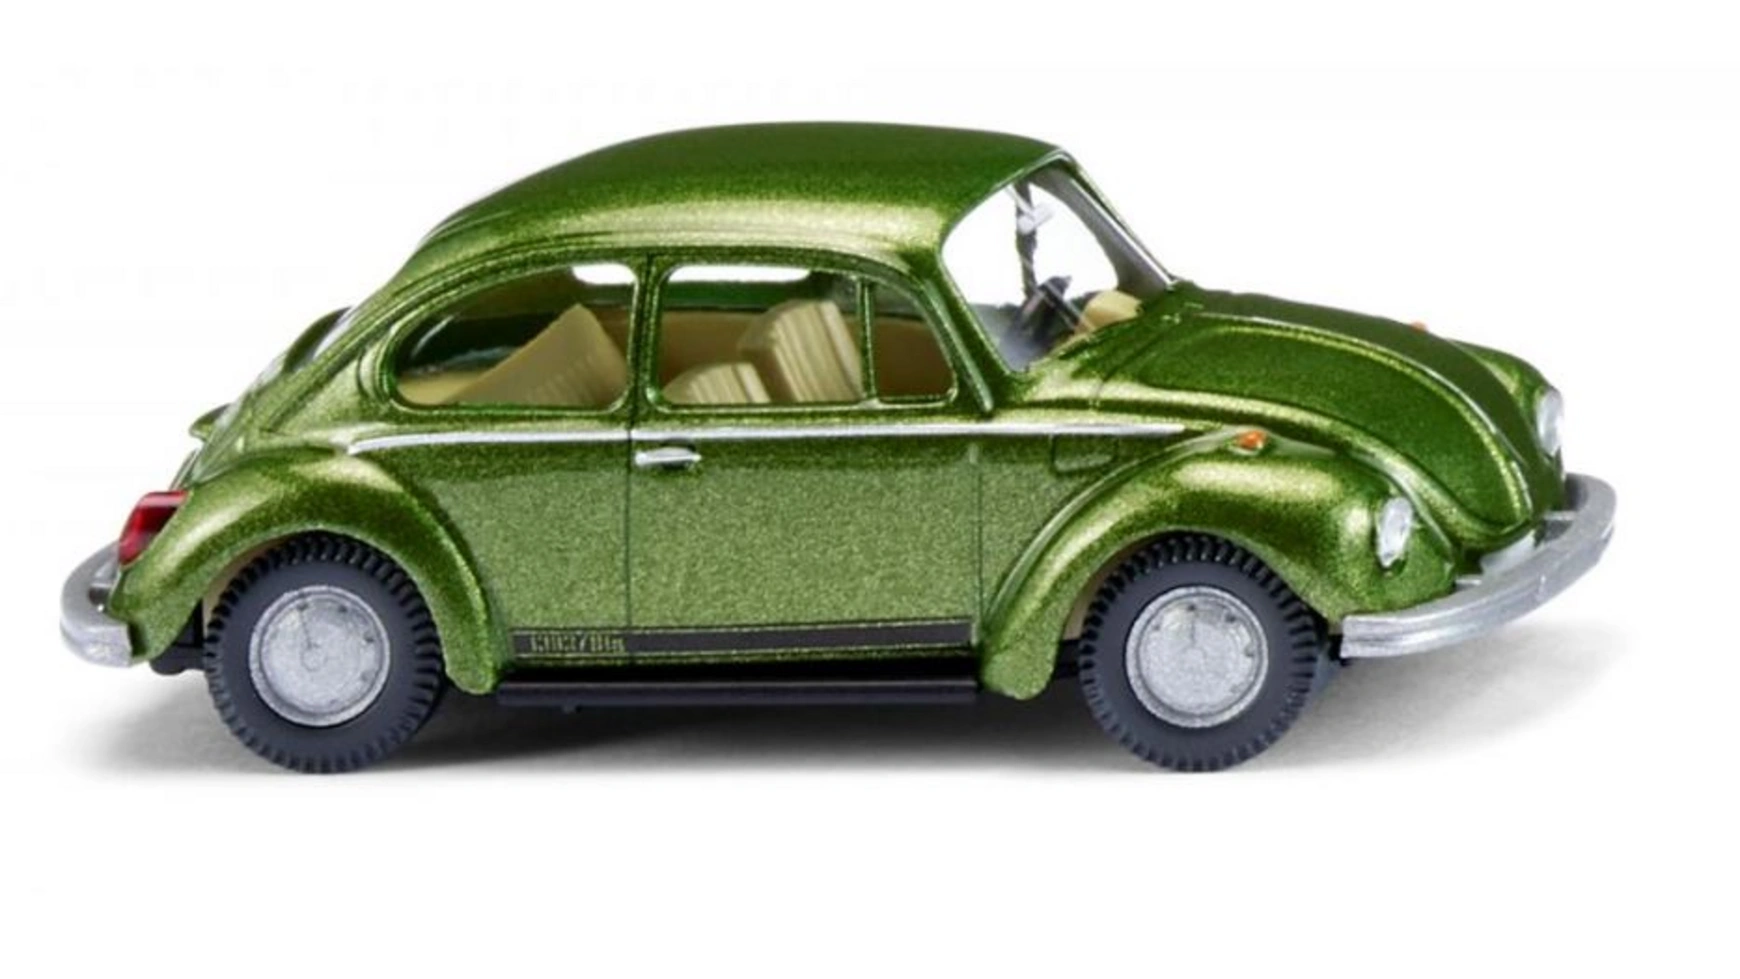 Wiking 1:87 VW Beetle 1303 S Big встречен мхом interest mini wear resistant solid model ornaments realistic beetle birthday gift fake beetle toy beetle toy